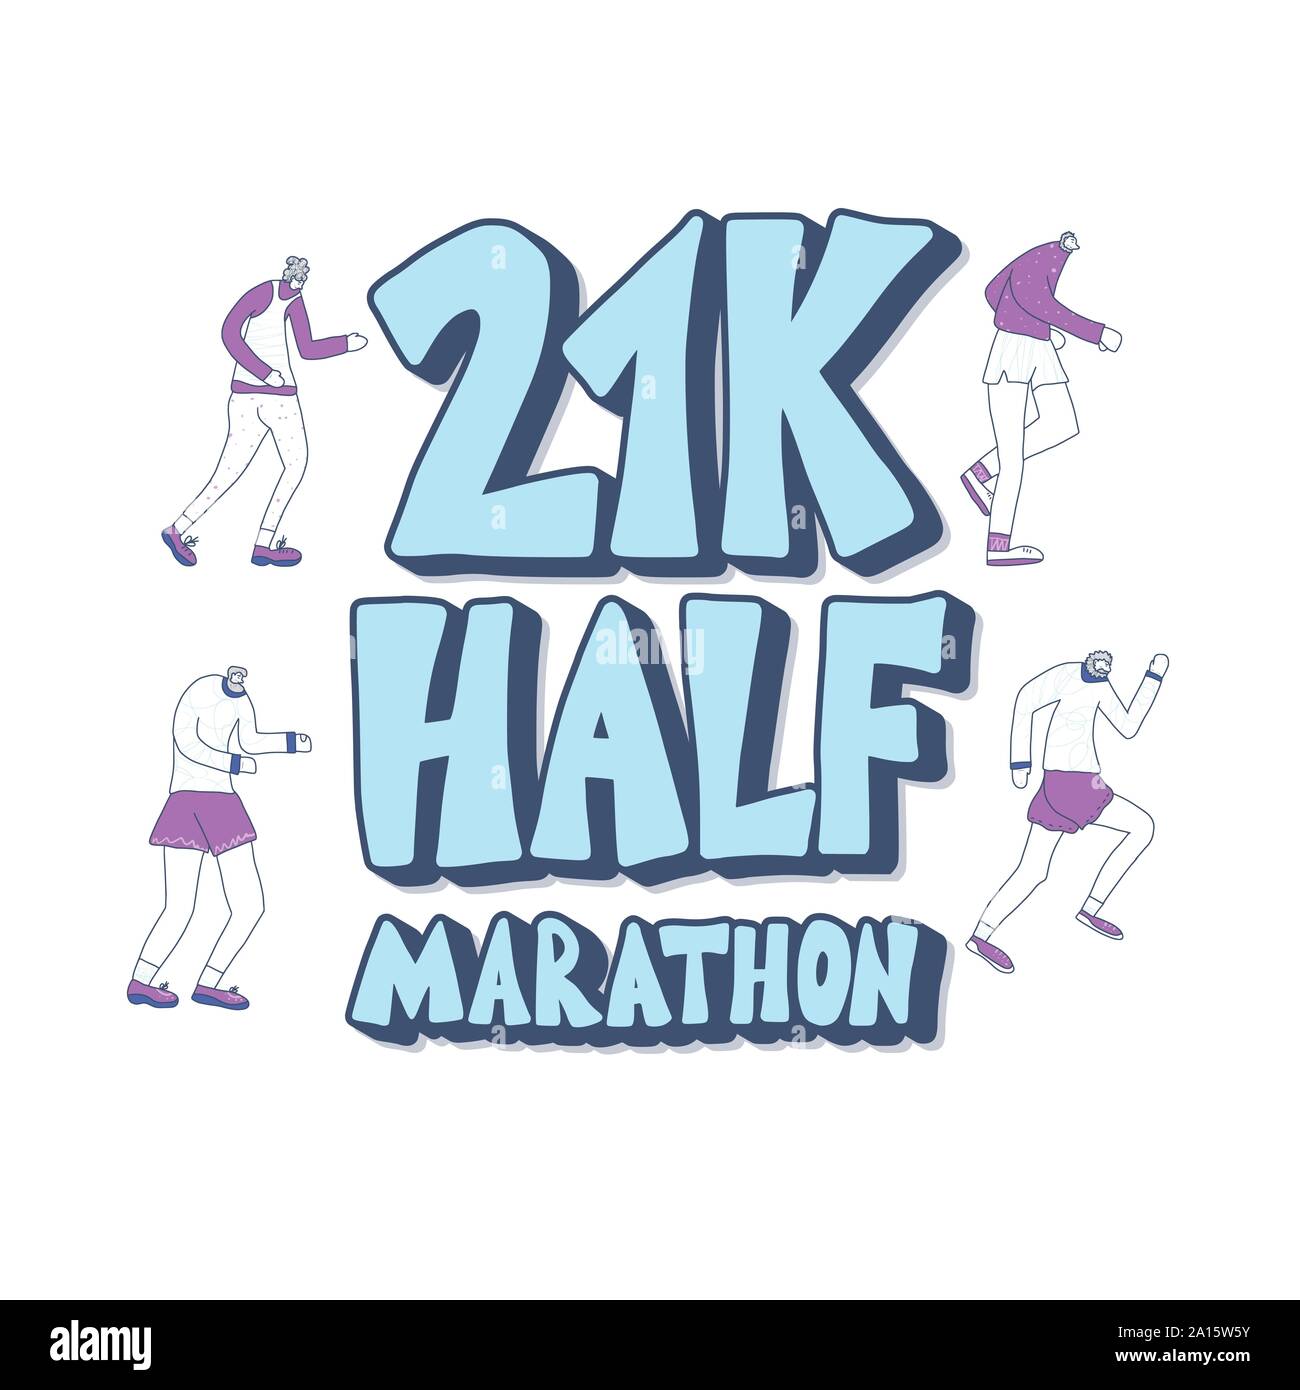 21K half marathon text with tiny senior runners. Vector illustration. Stock Vector